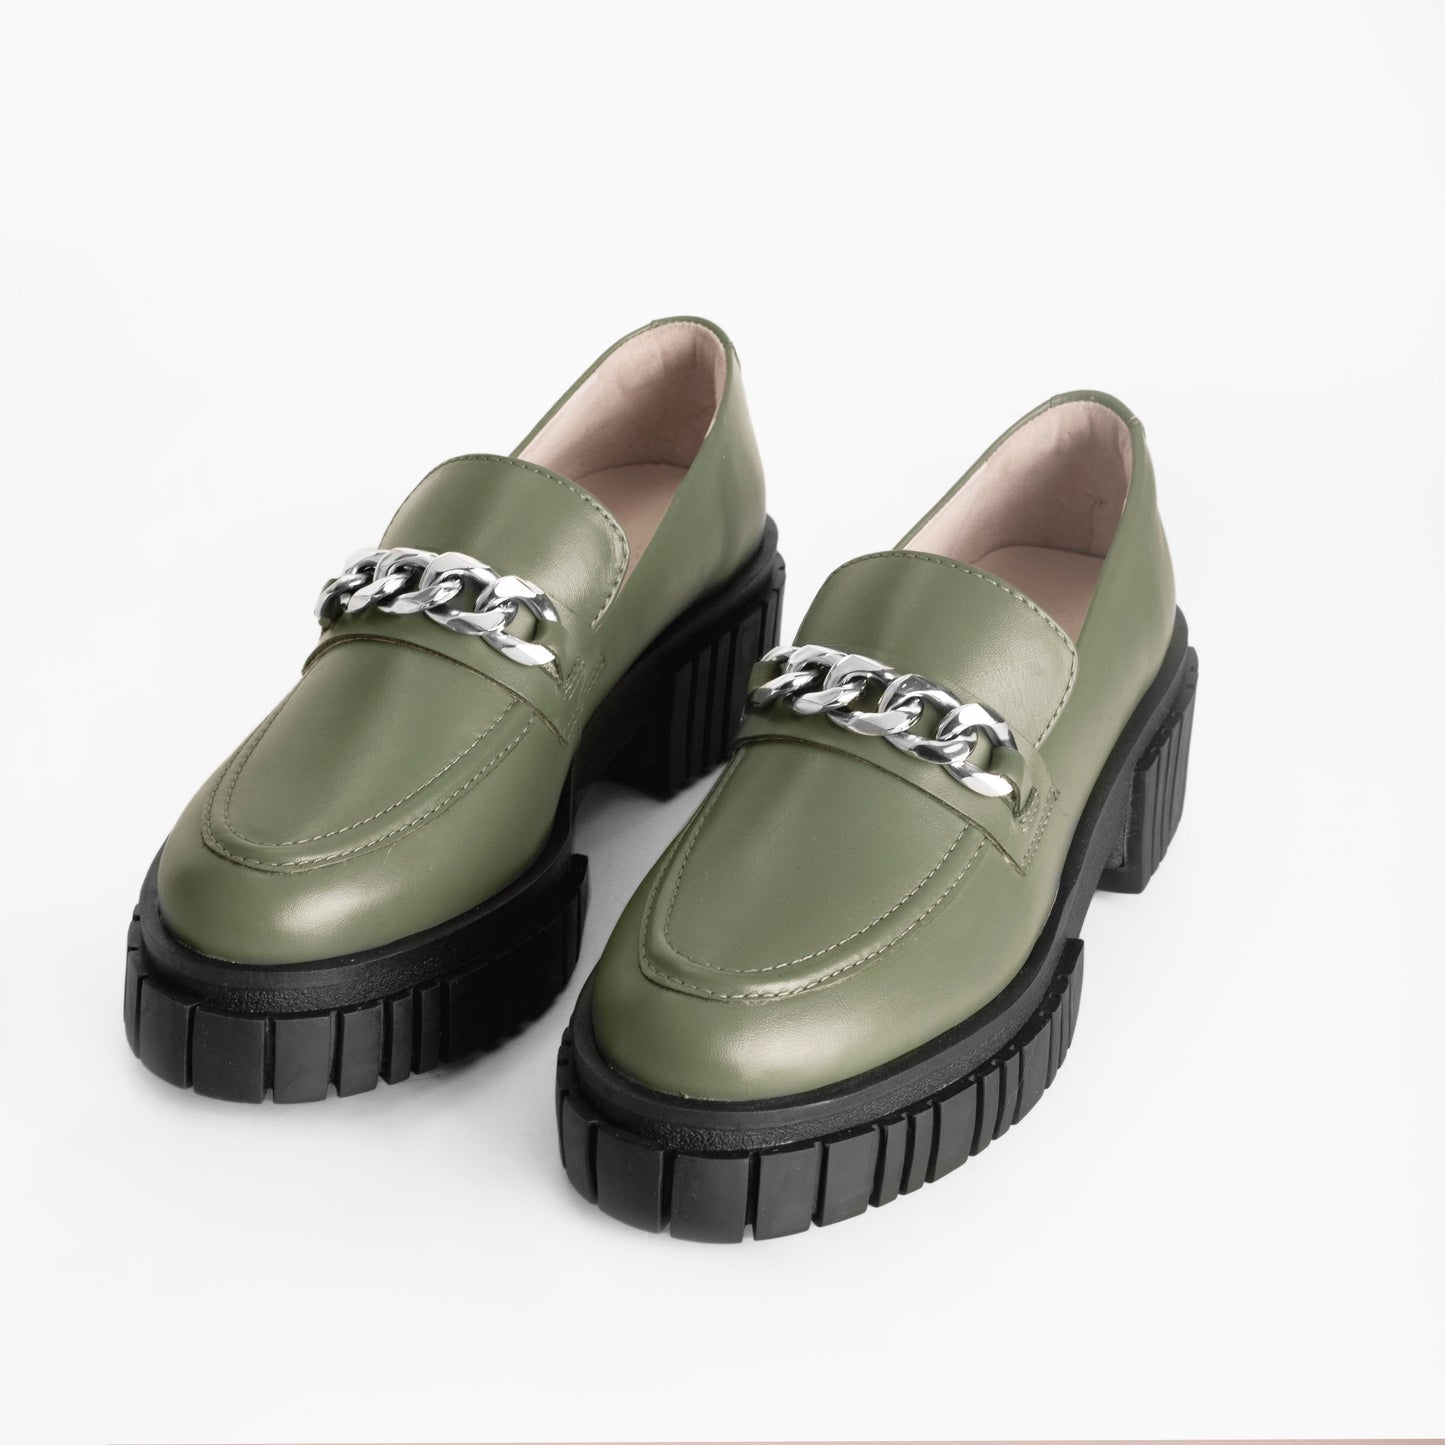 Vinci Shoes Emilia Military Green Loafers